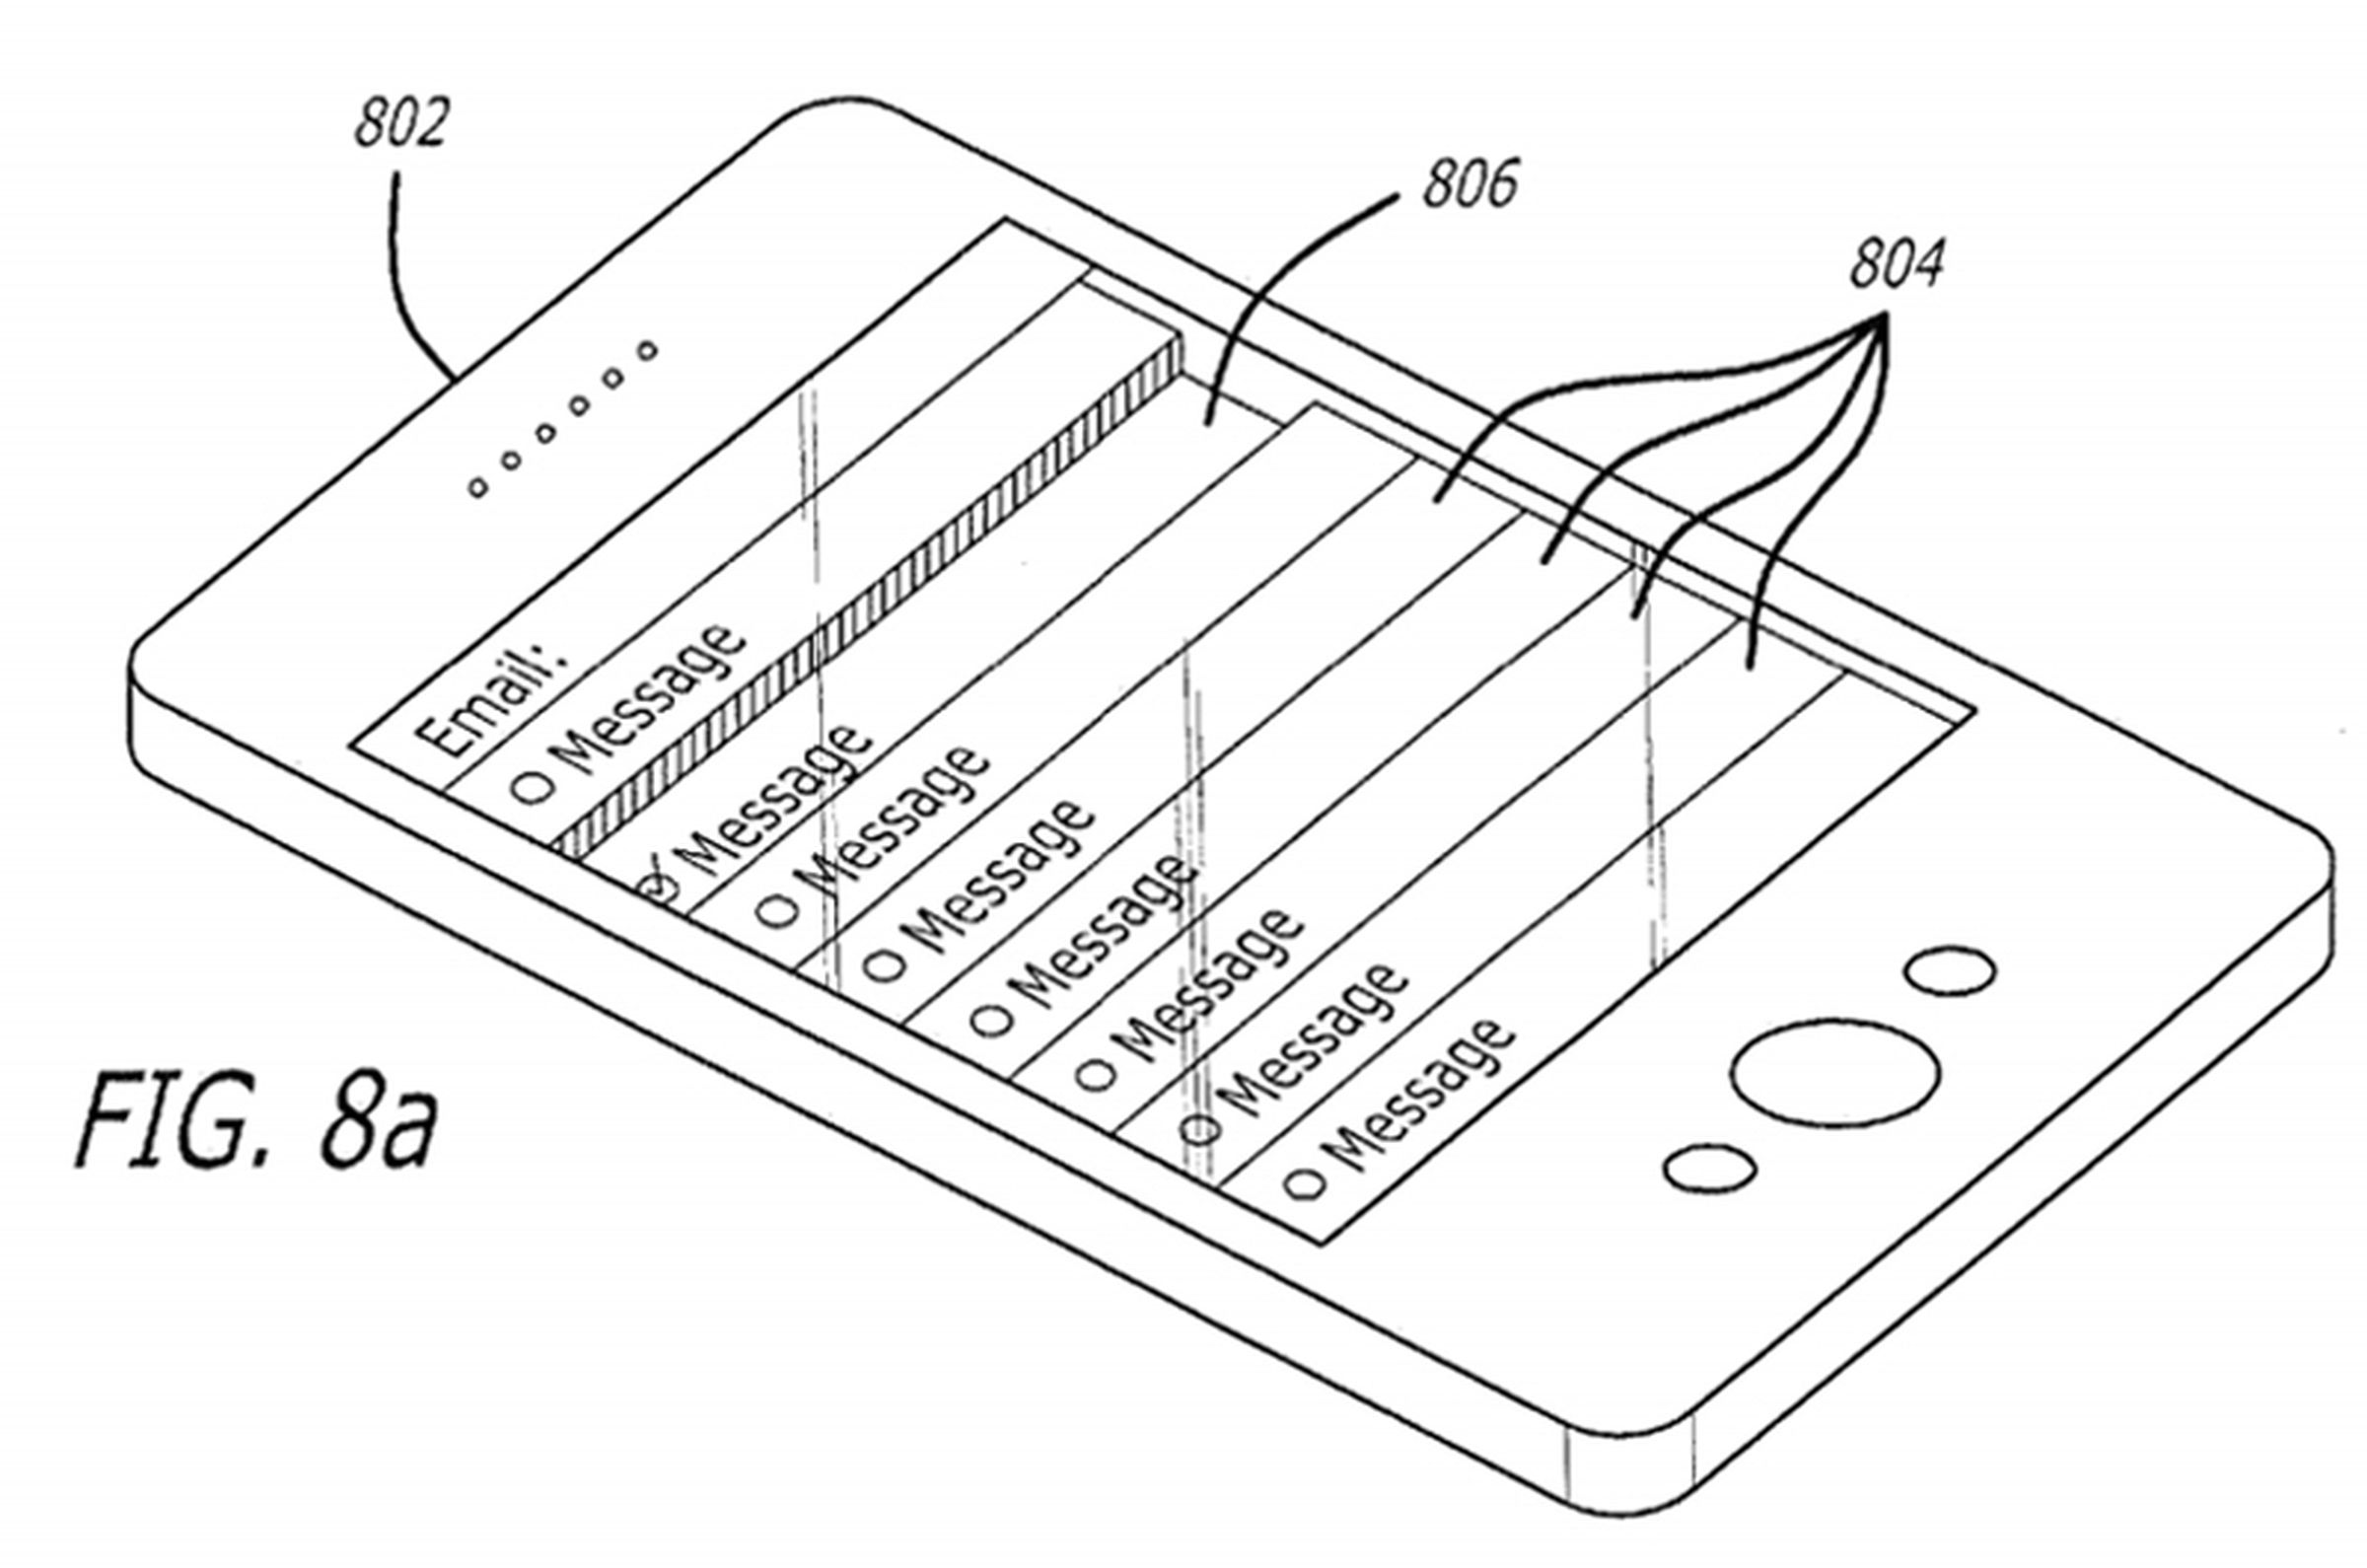 Amazon 3D phone patent illustrations